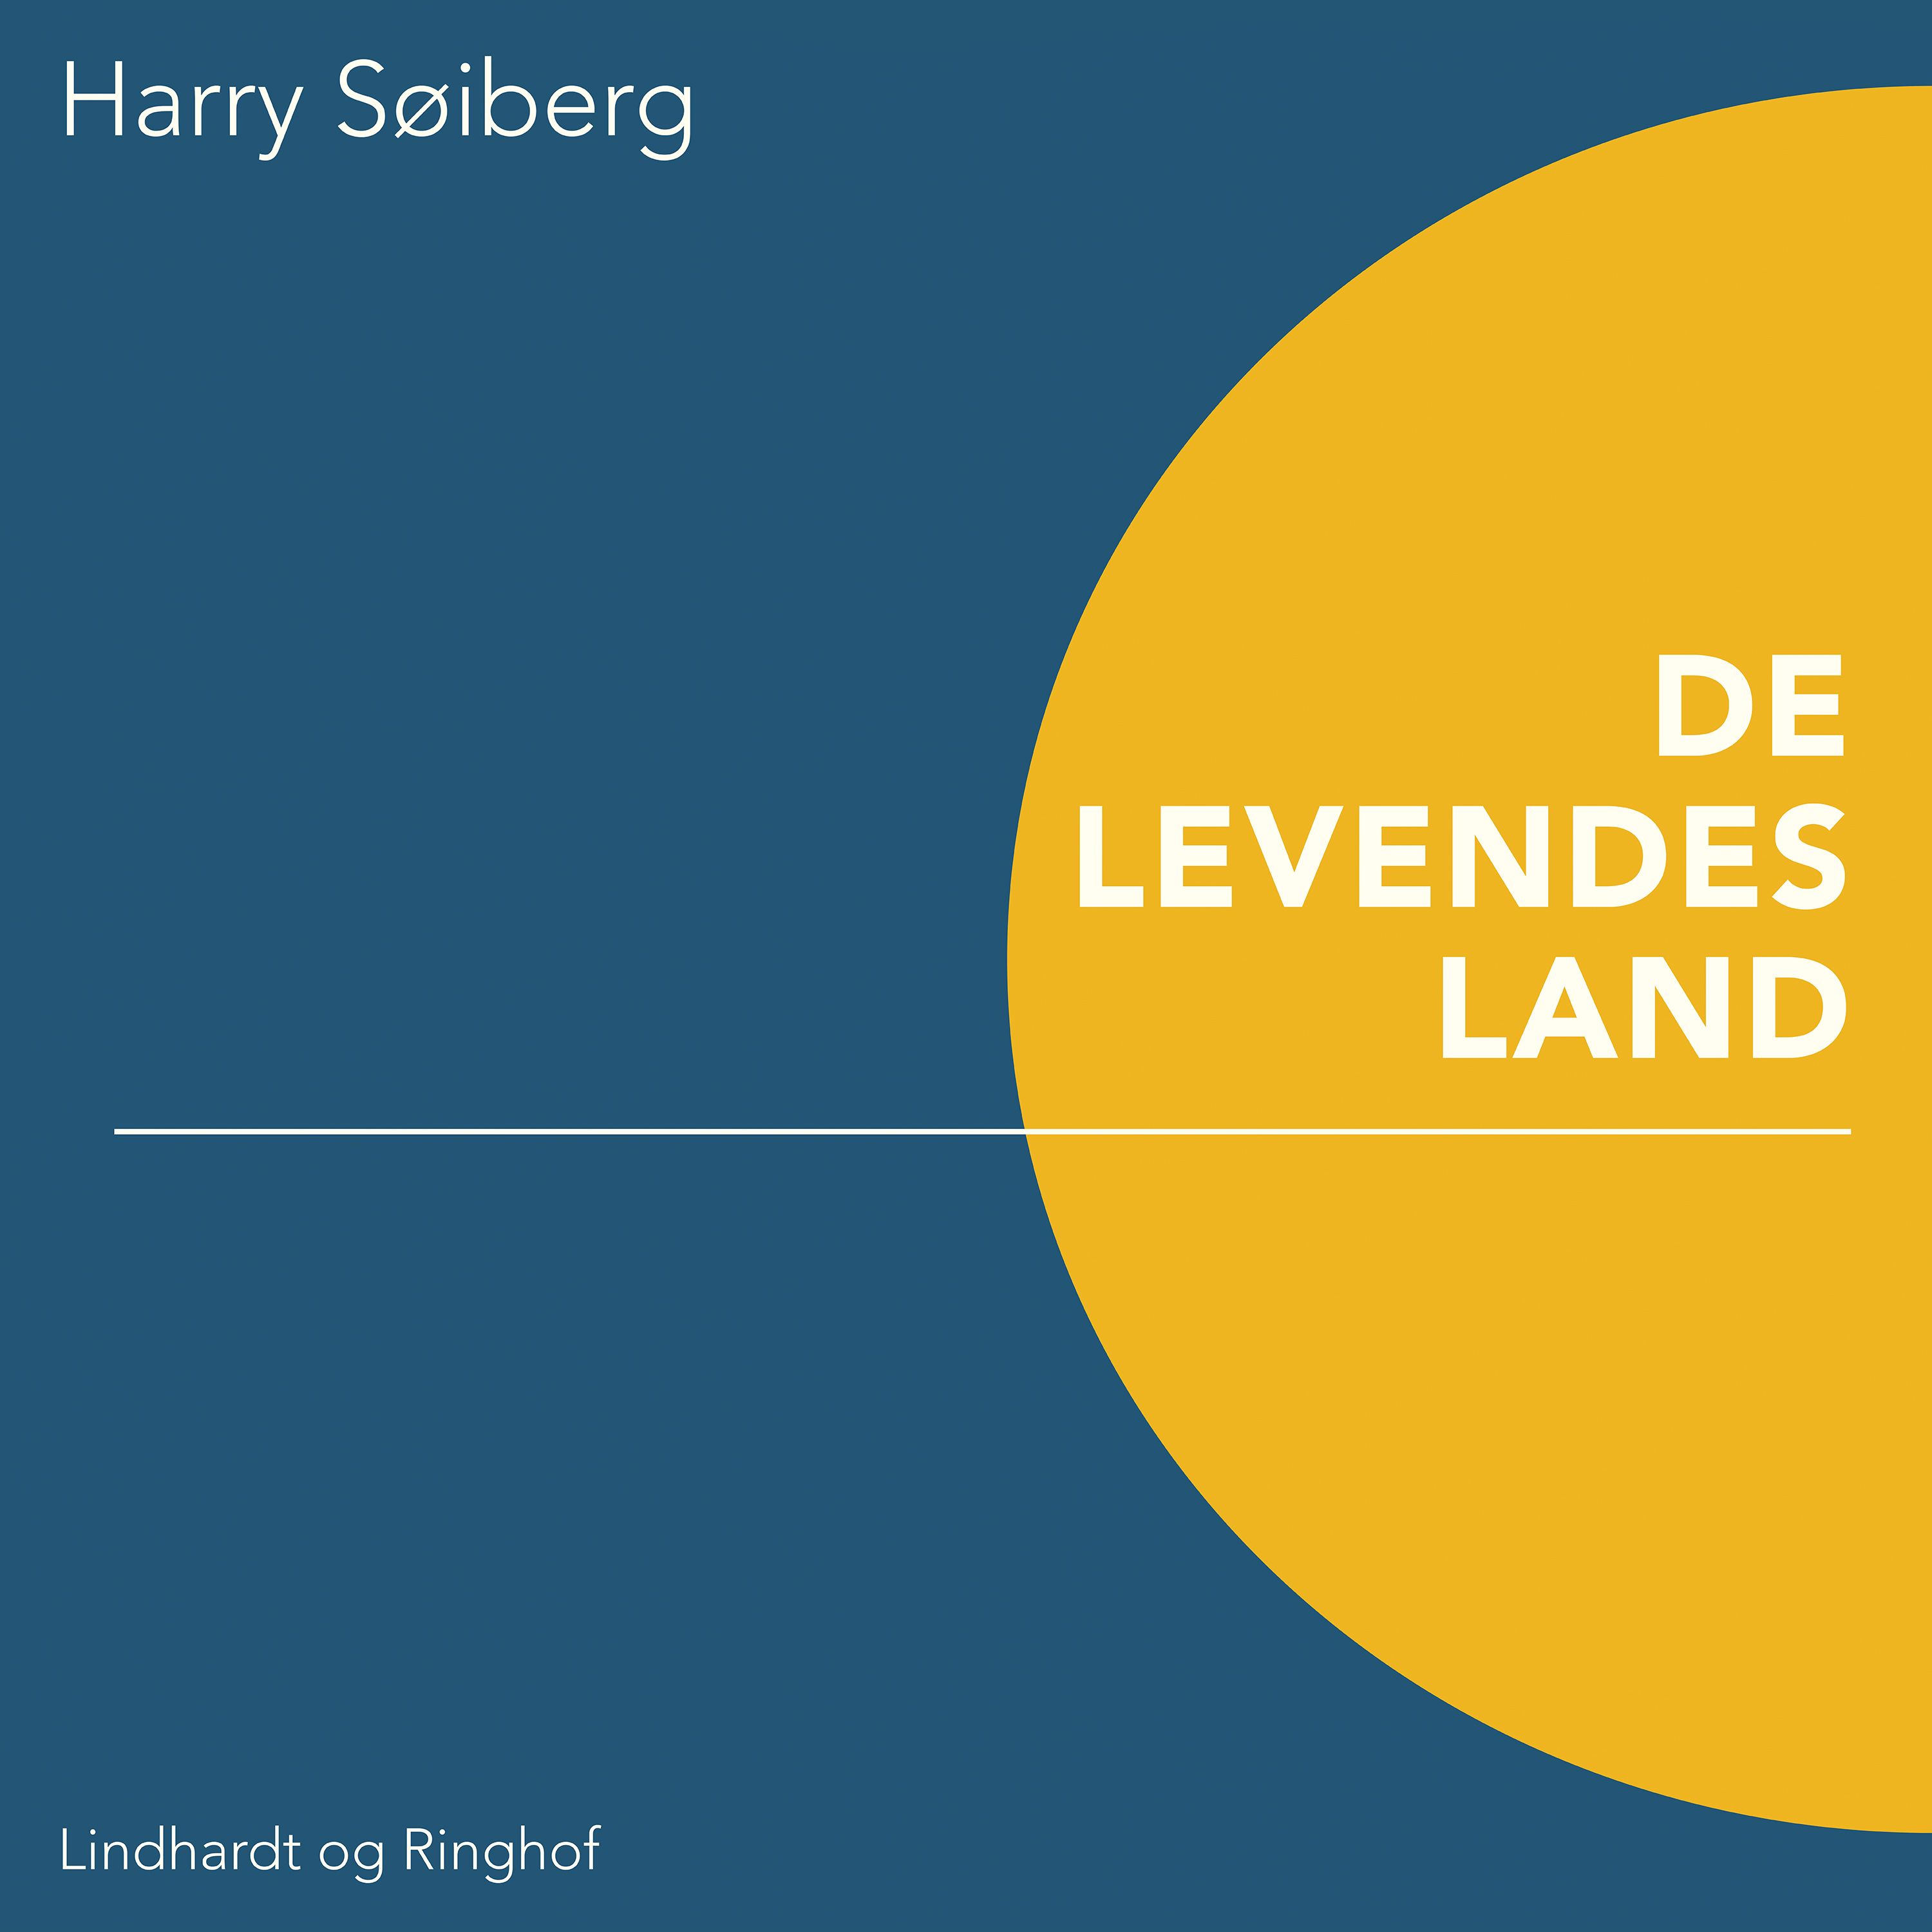 De levendes land, audiobook by Harry Søiberg